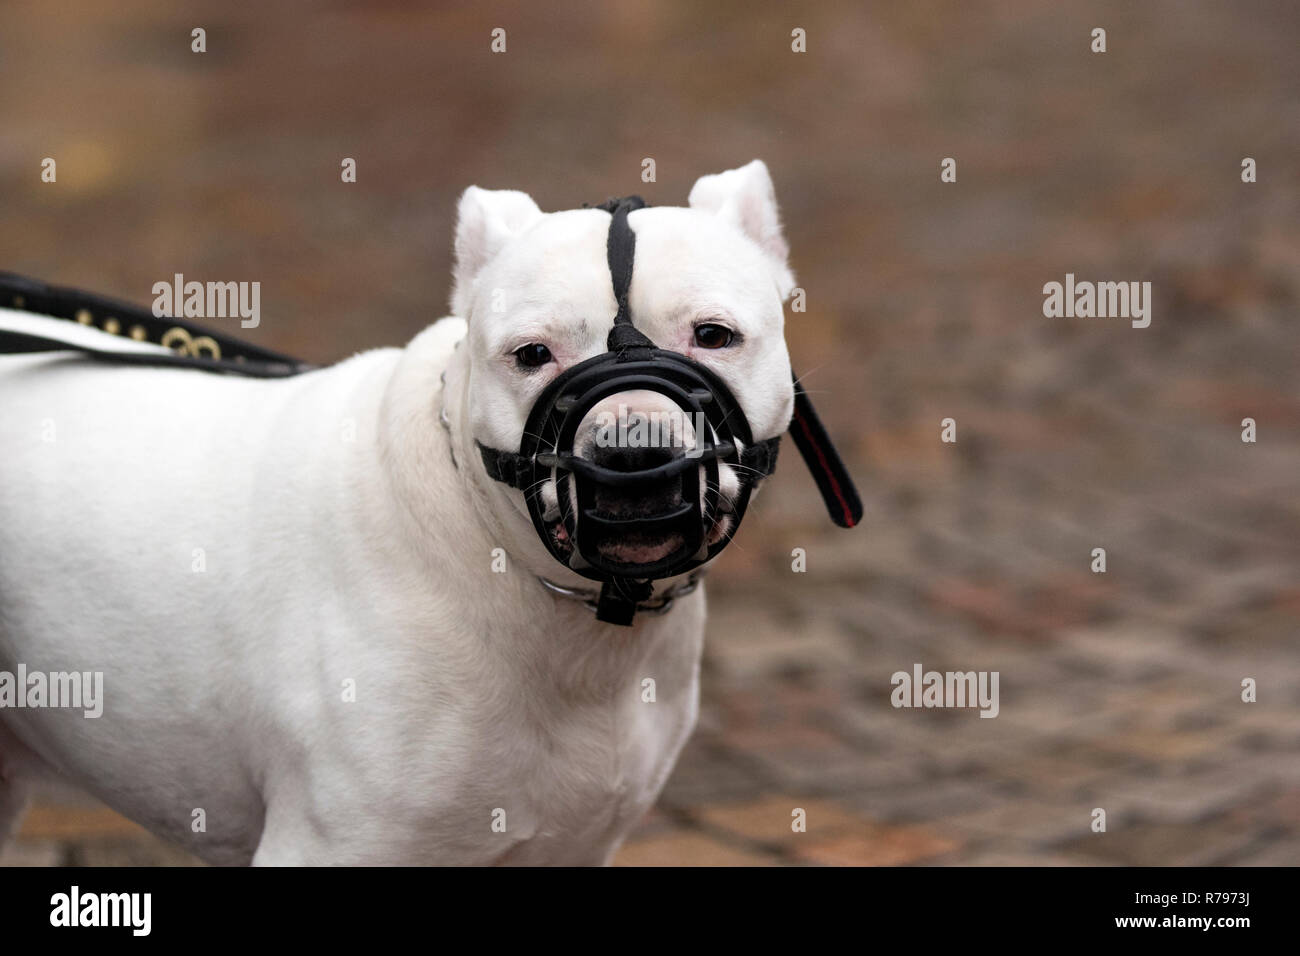 White Staffordshire Bull Terrier dog wearing black muzzle. Stock Photo